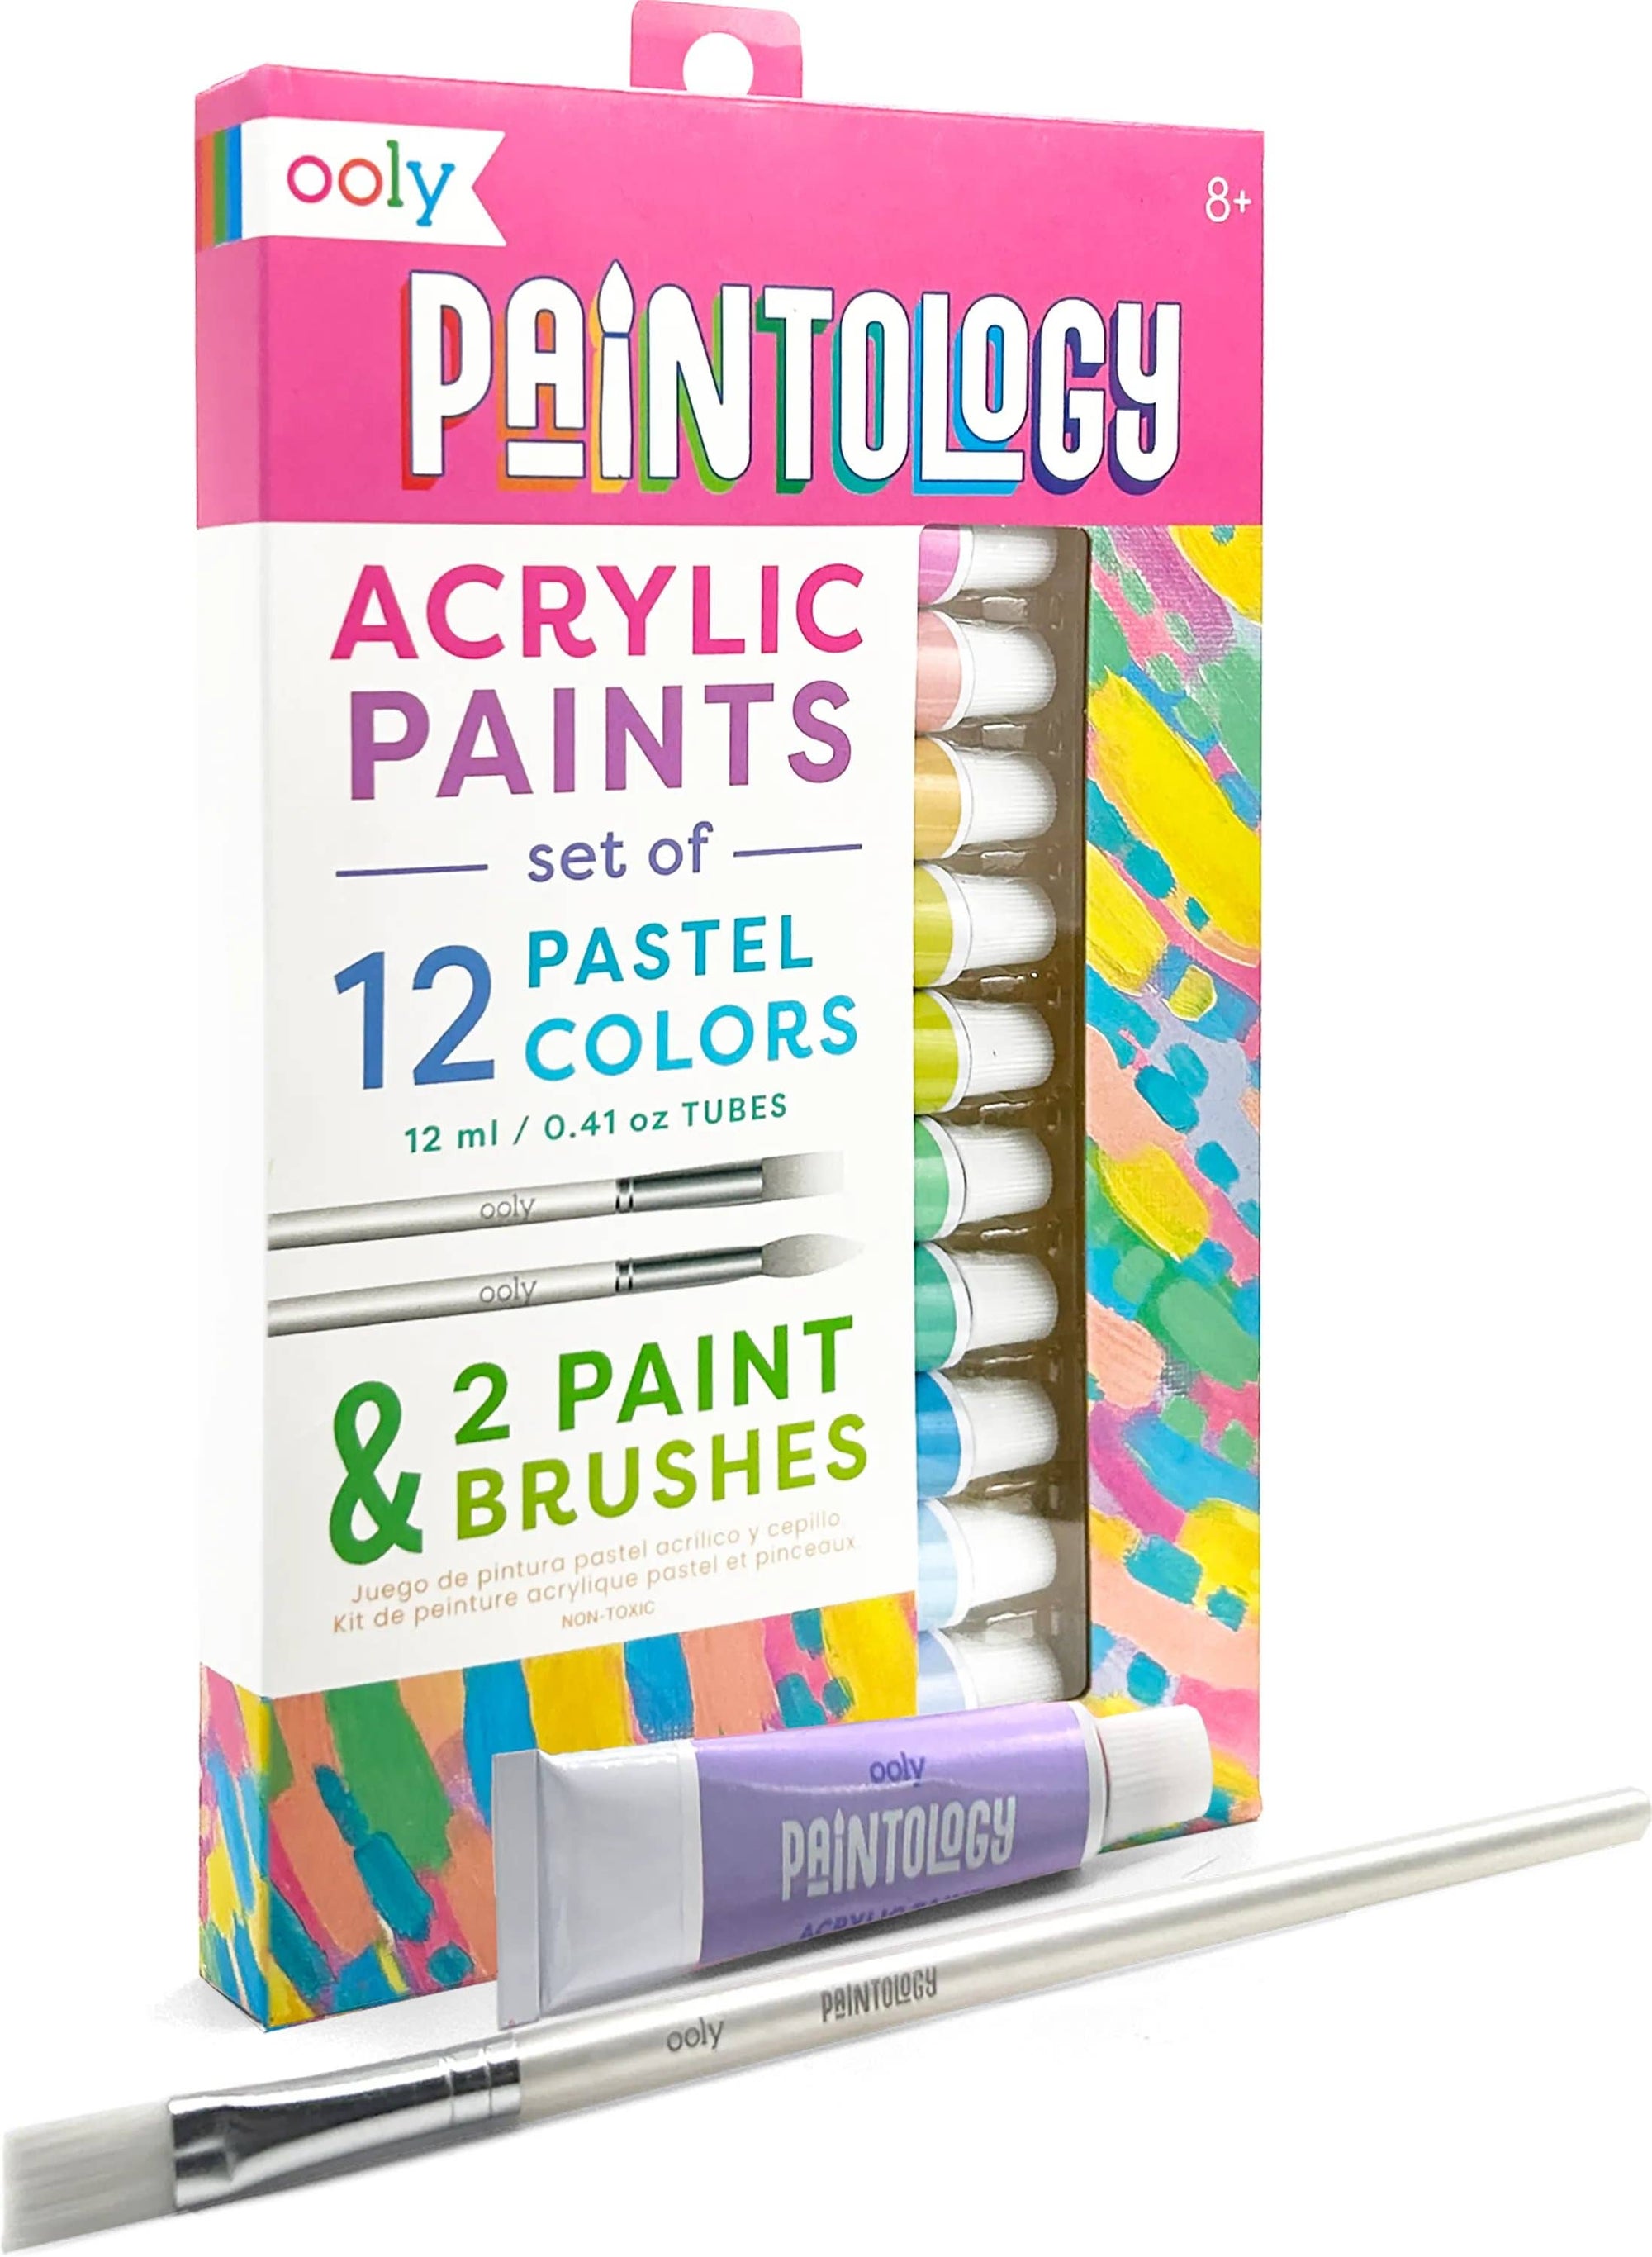 Pastel Paintology Acrylic Paints + 2 Brushes